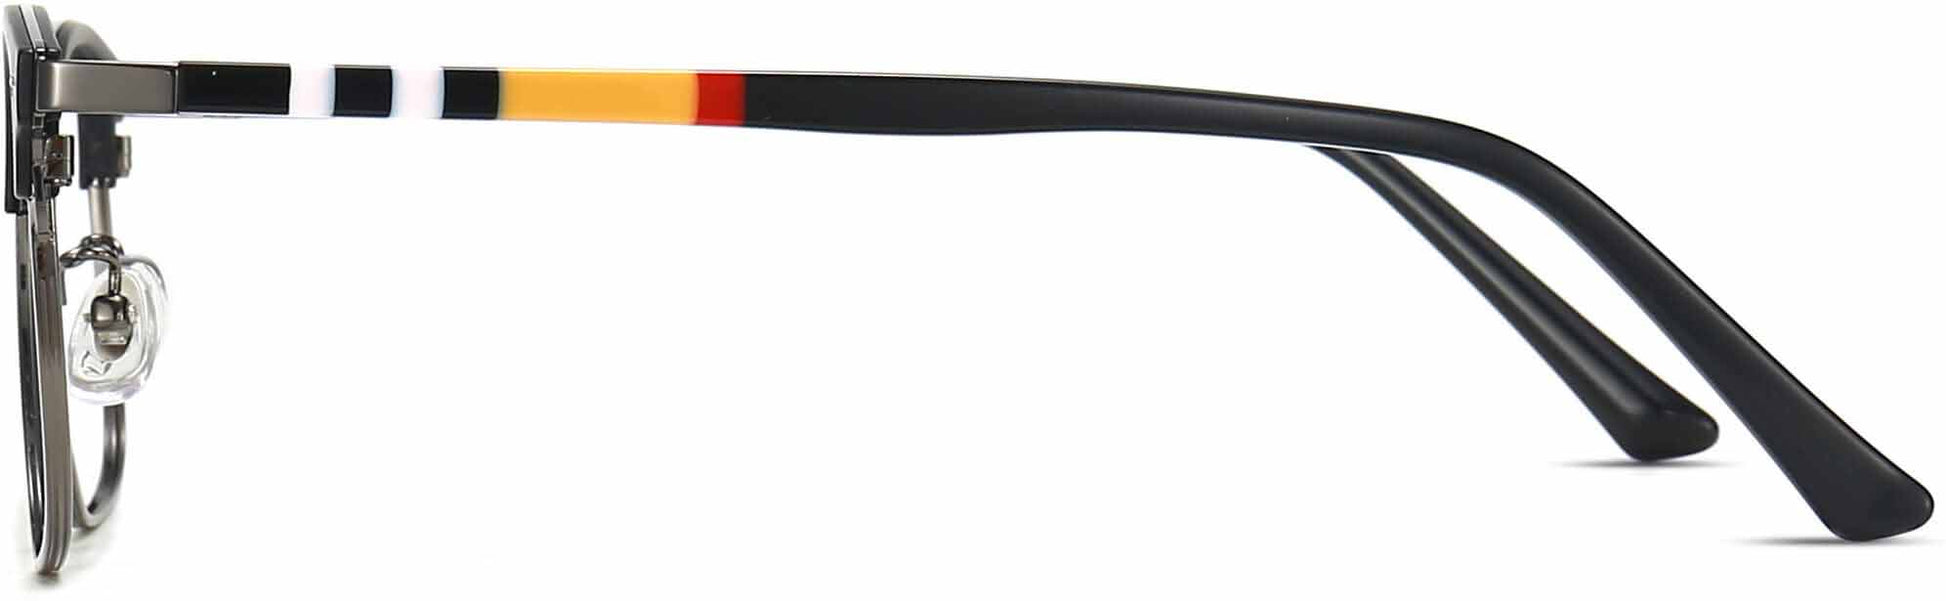 Mdonne Browline Black Eyeglasses from ANRRI, side view